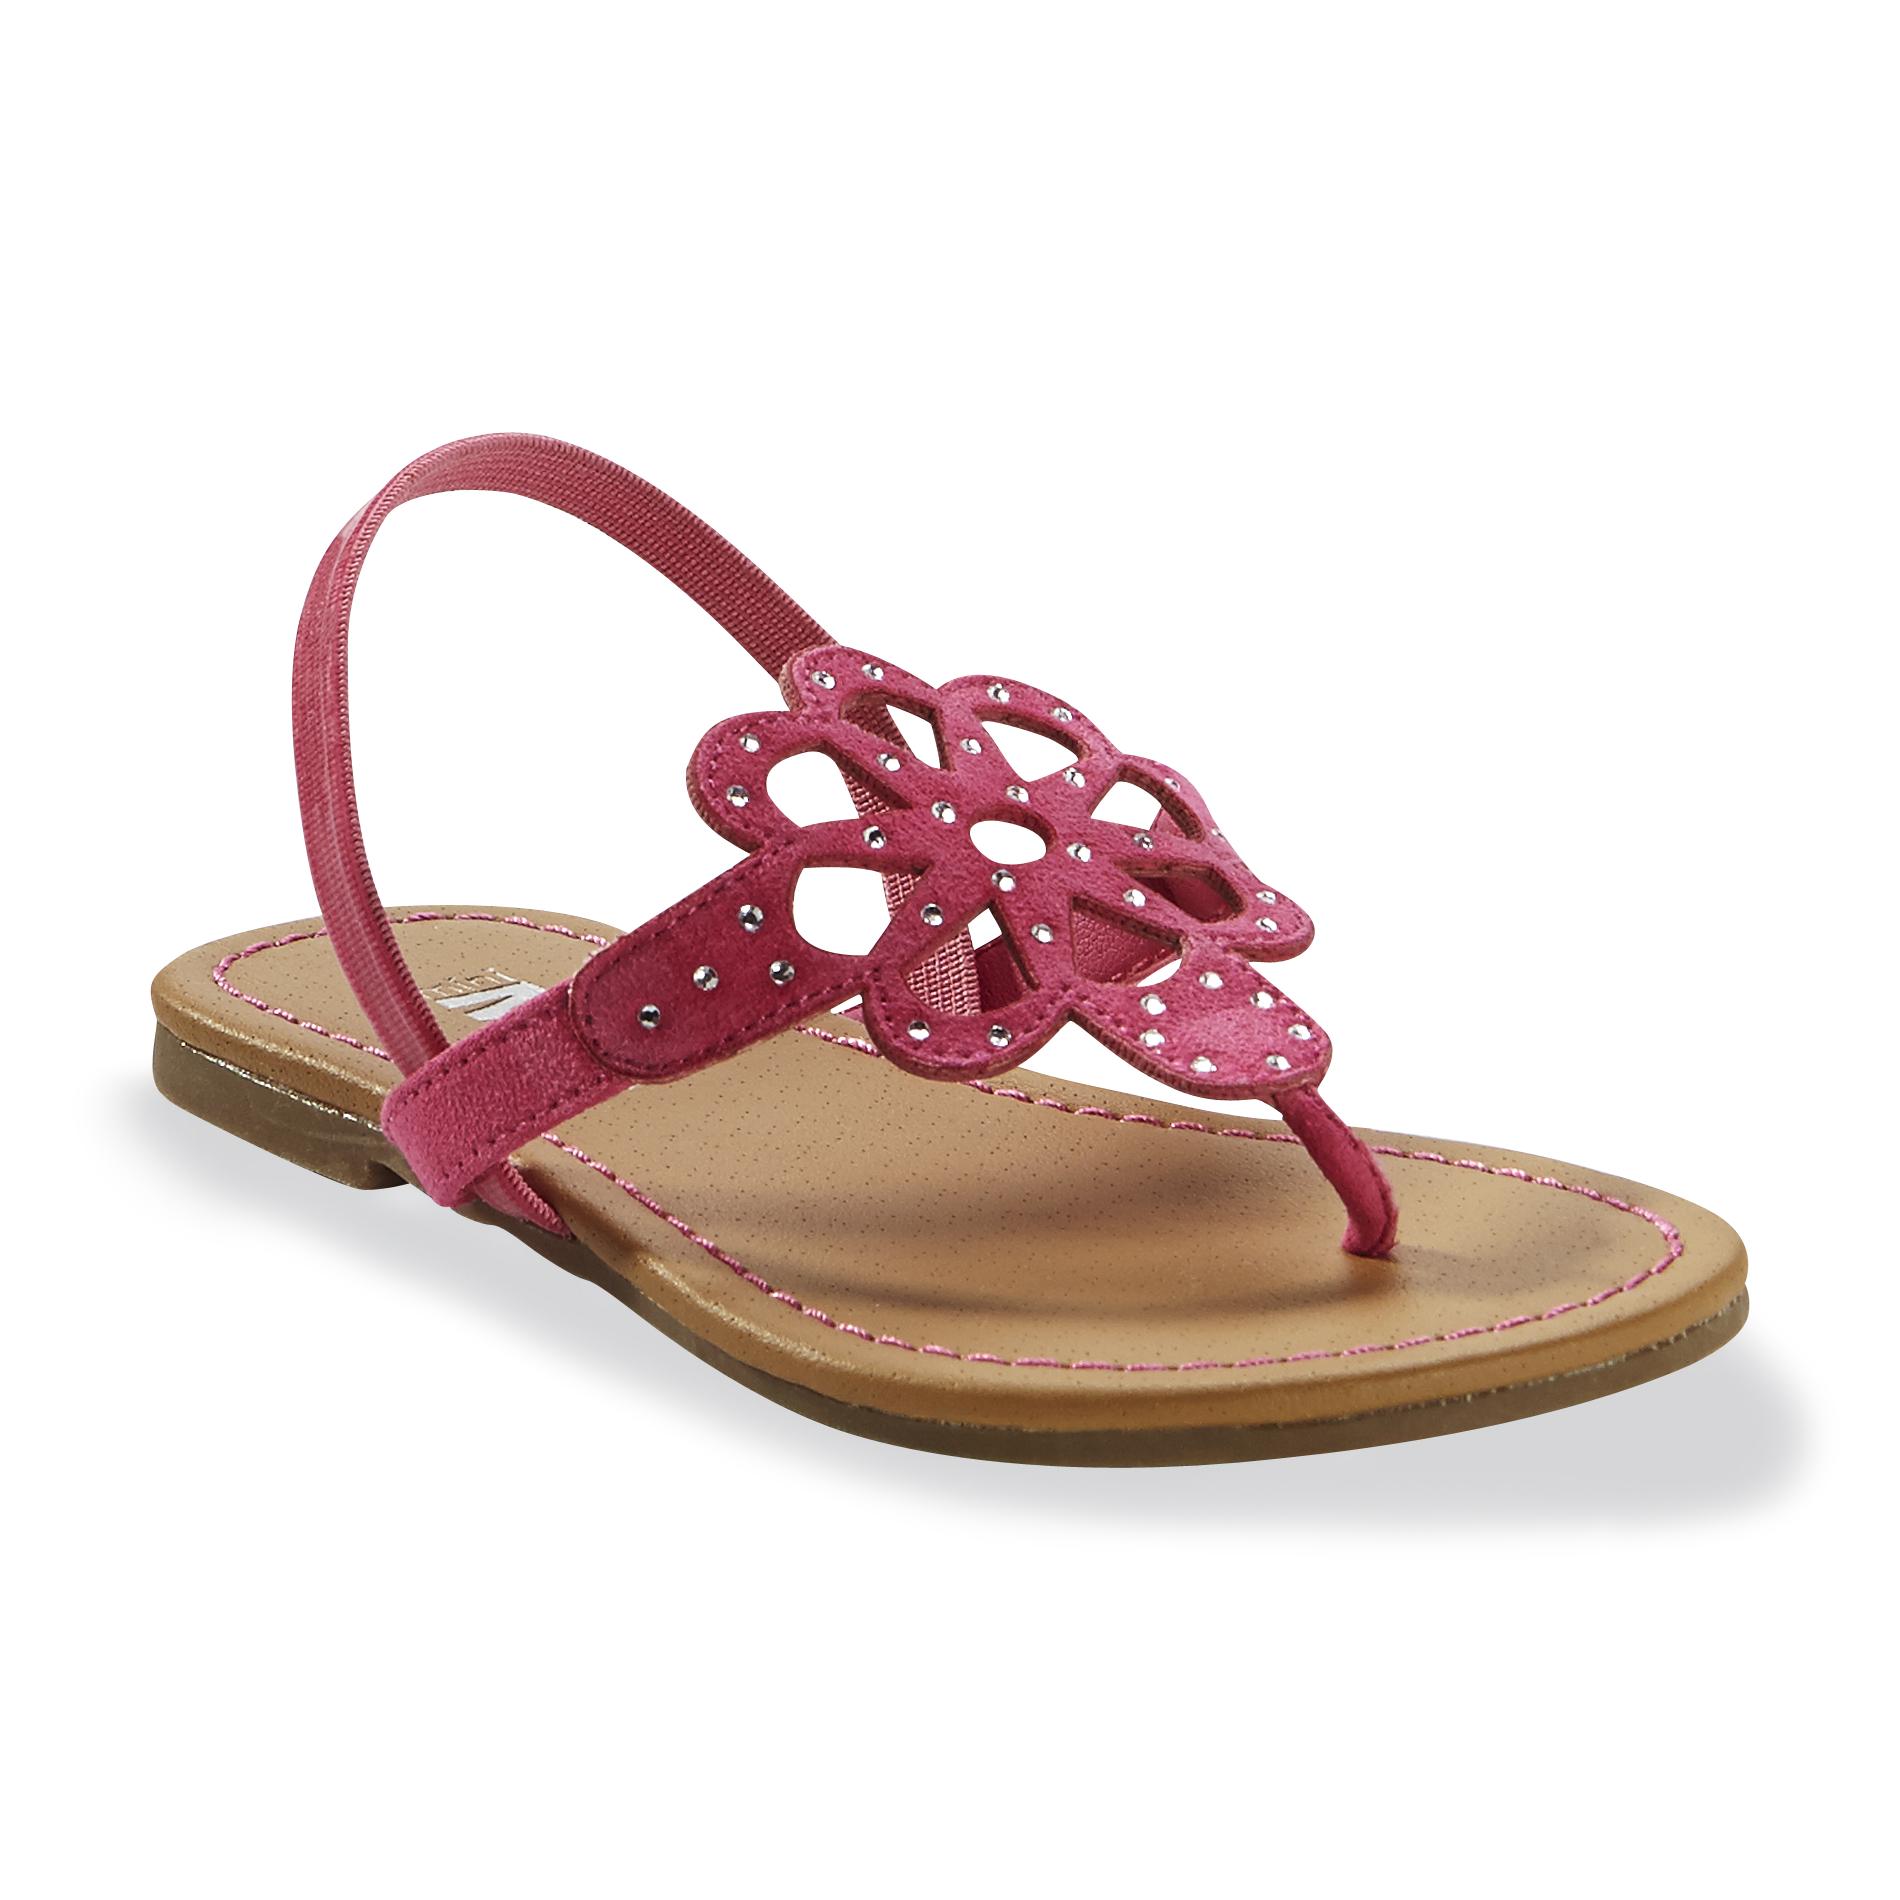 Mia Toddler Girl's Tosha Pink Sandal